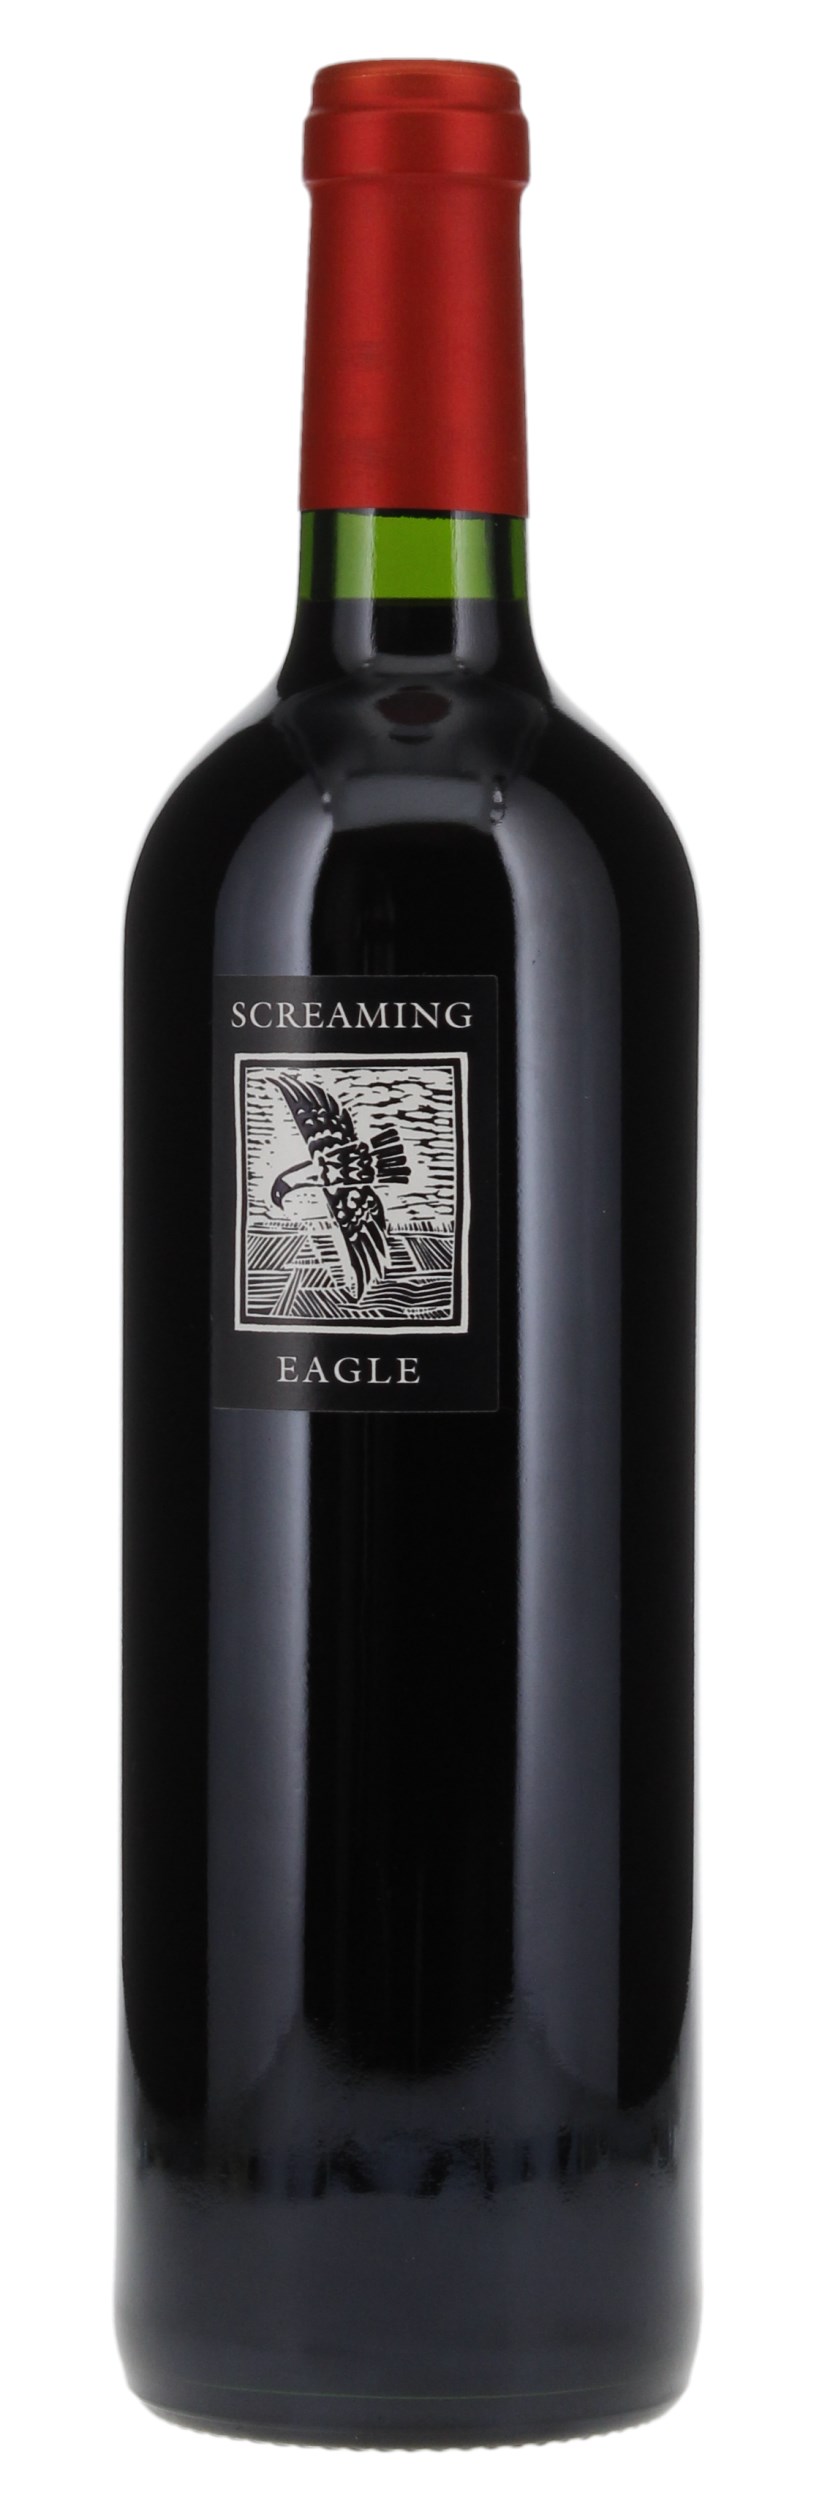 2005 Screaming Eagle Cabernet Sauvignon, 750ml